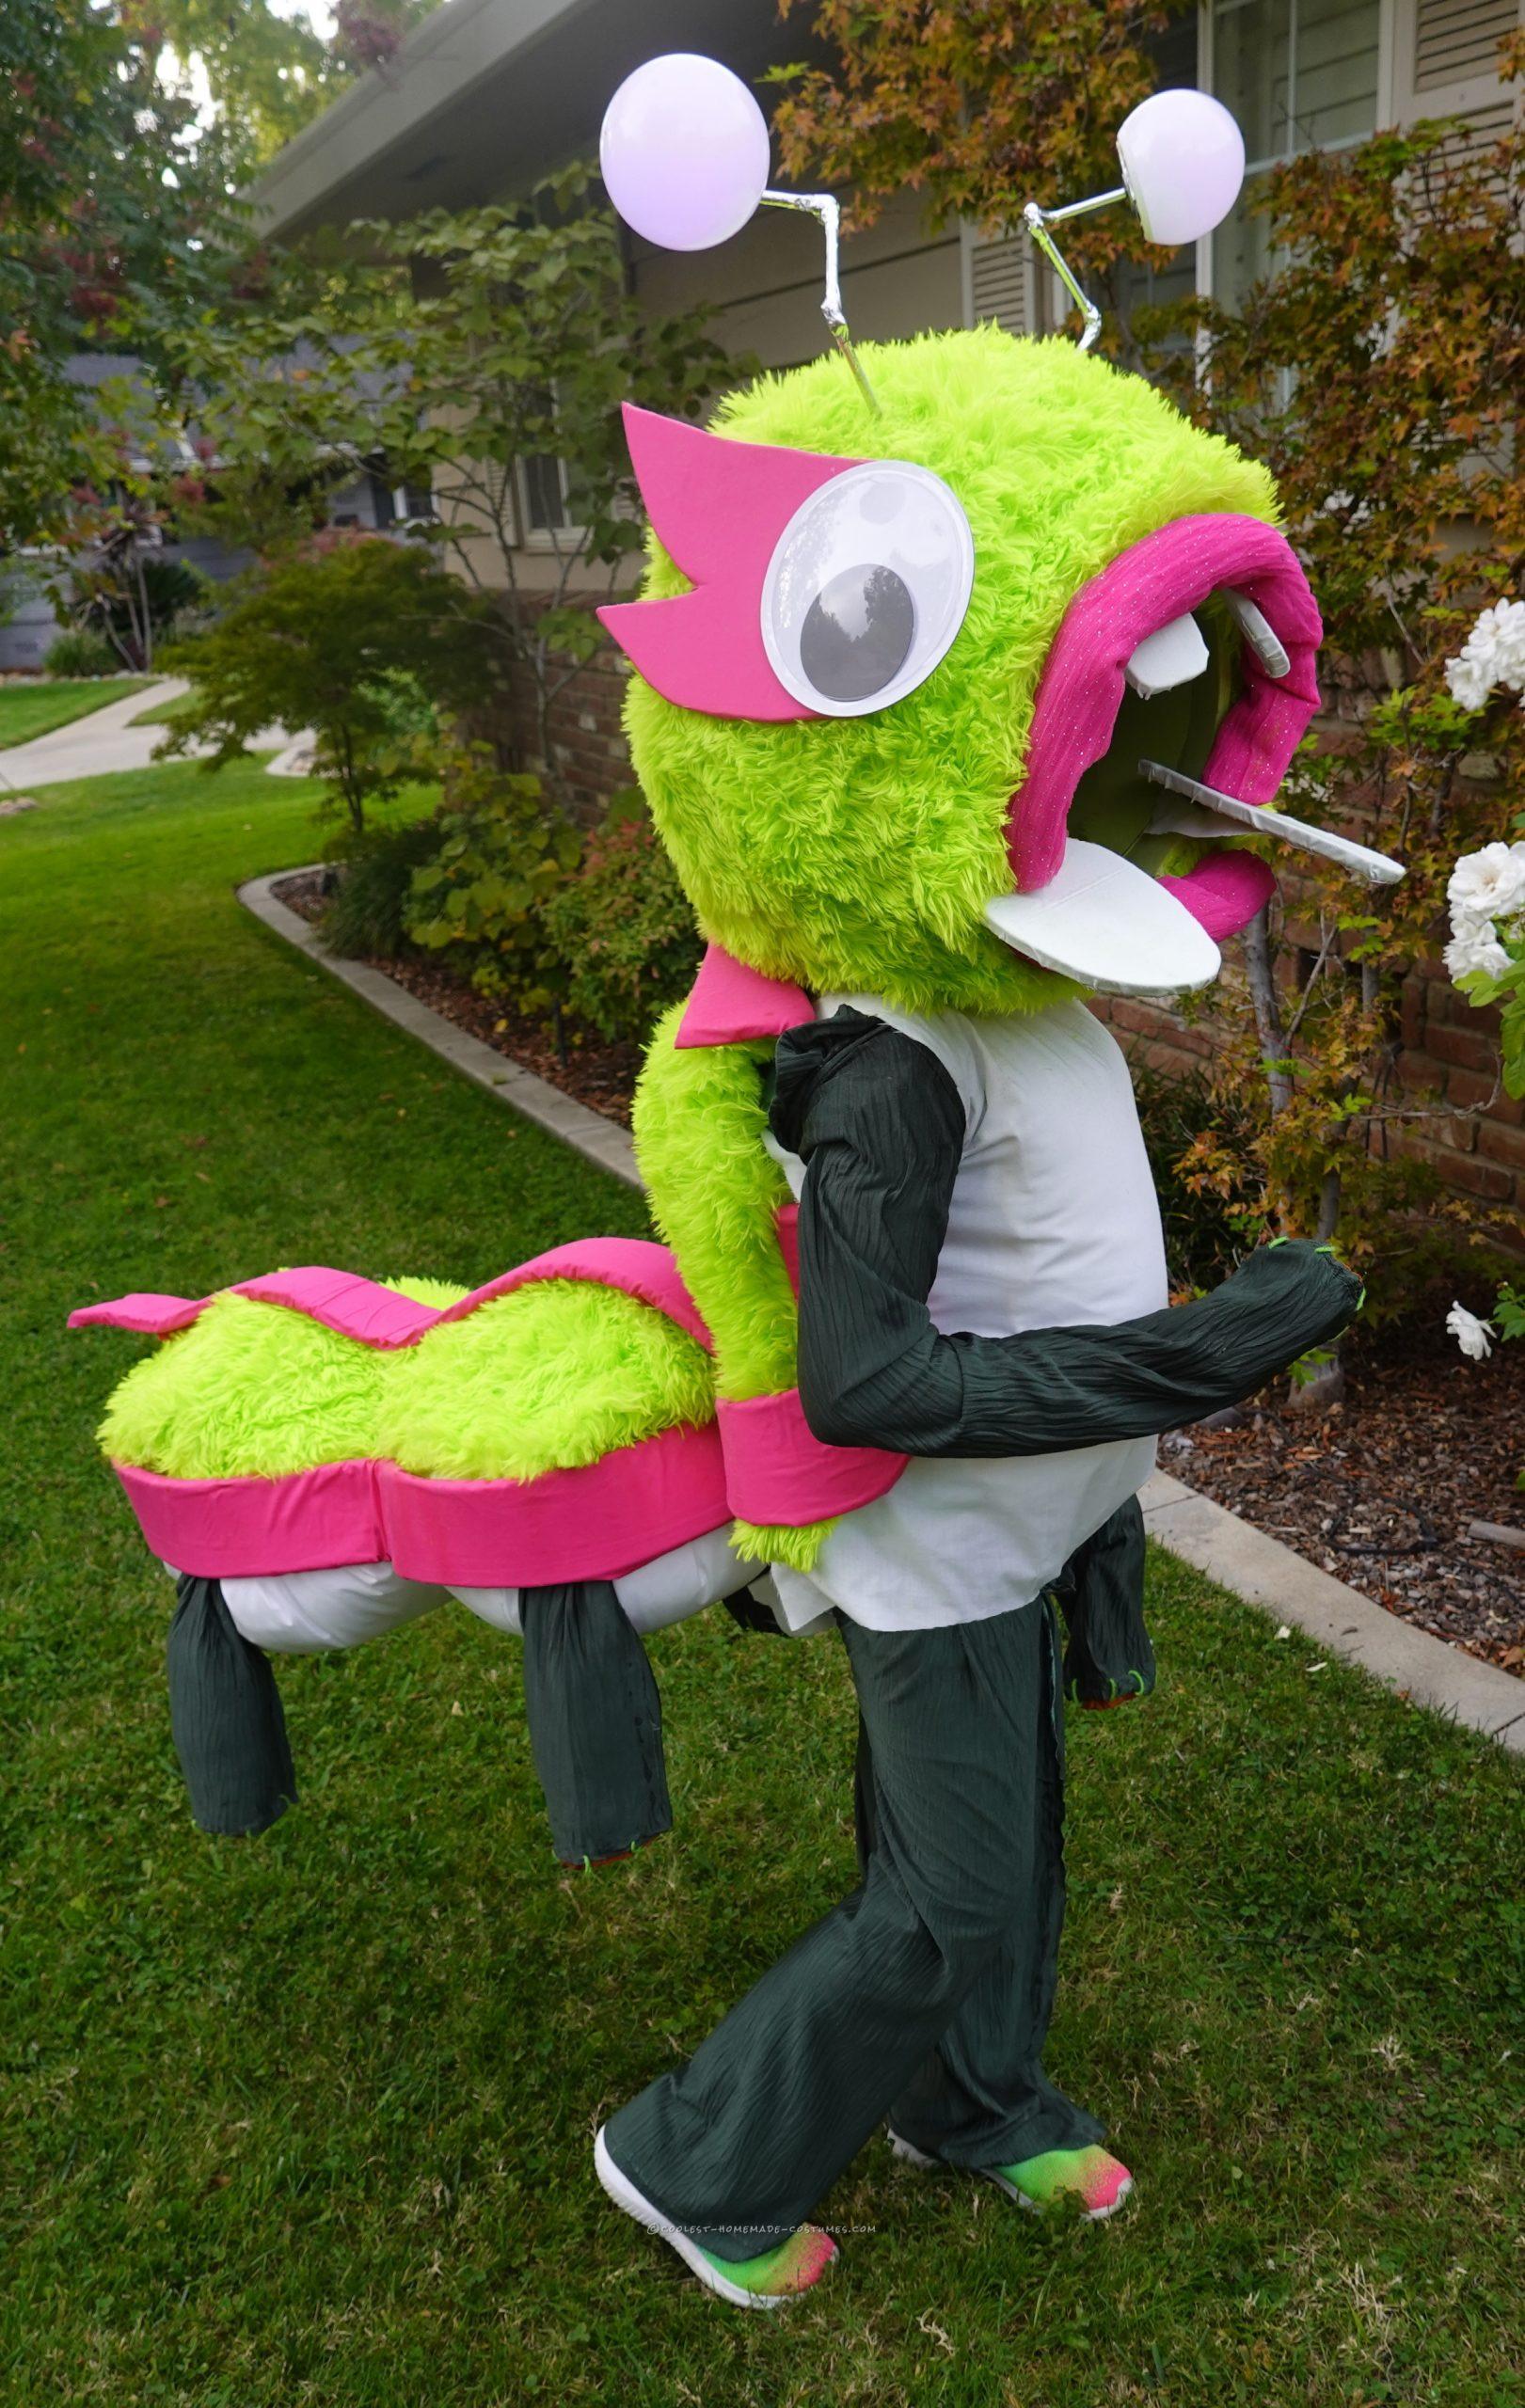 Cool DIY Sackboy Caterpillar Costume from Sackboy: A Big Adventure